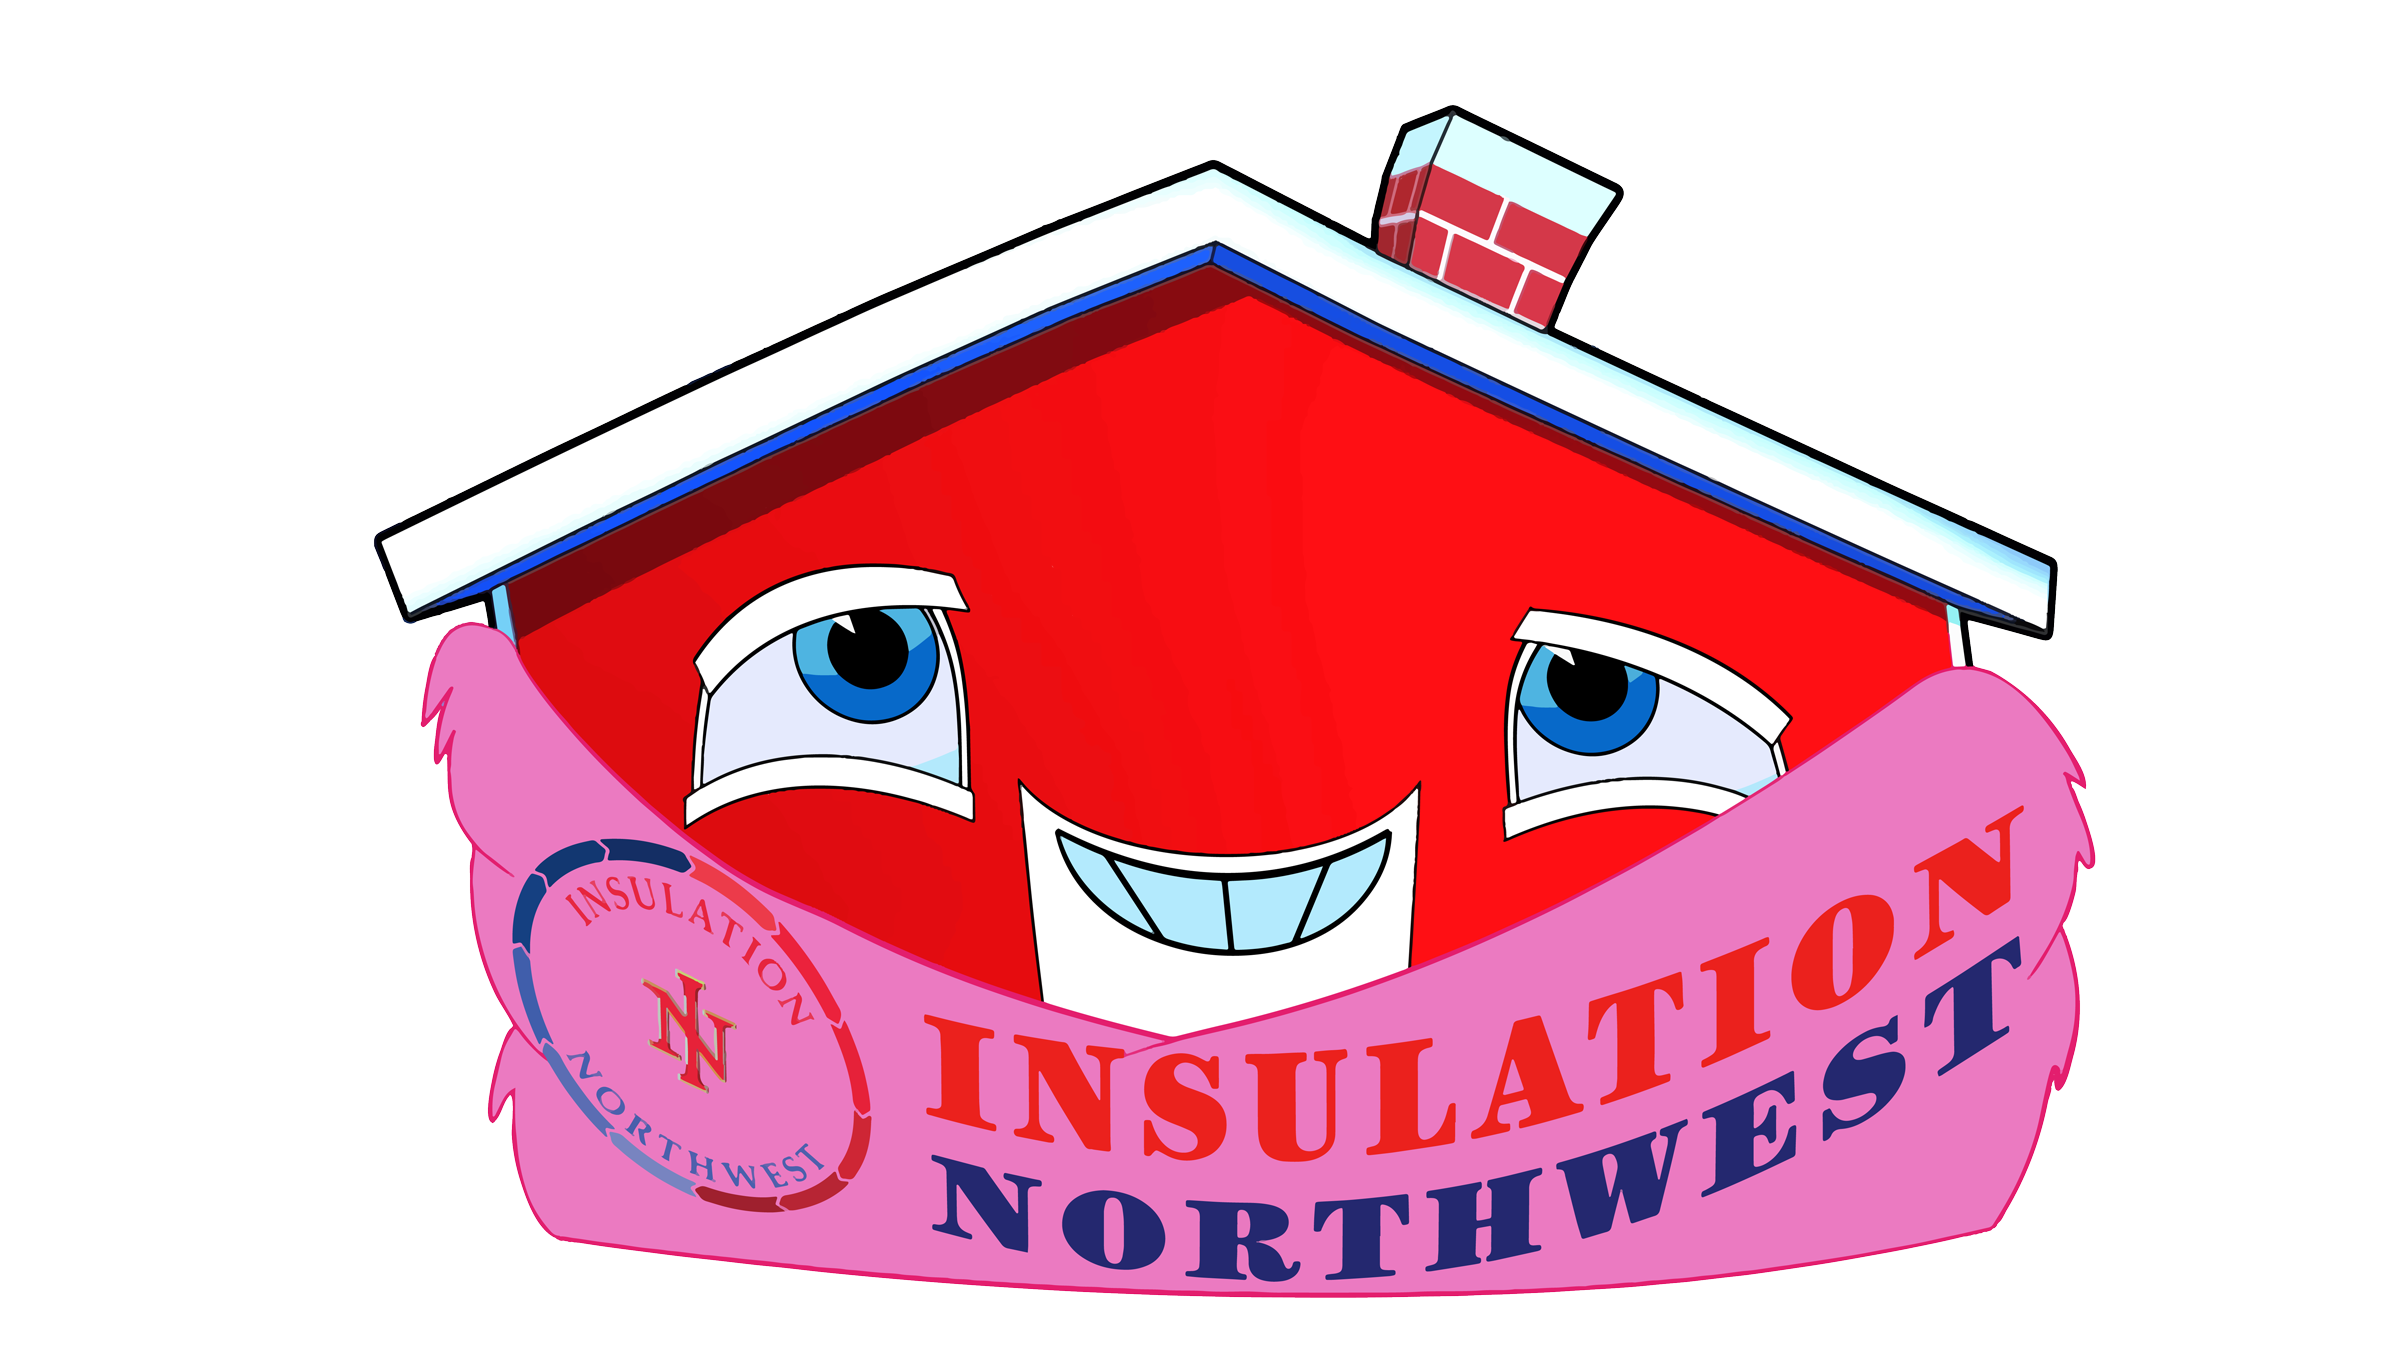 Insulation Northwest House